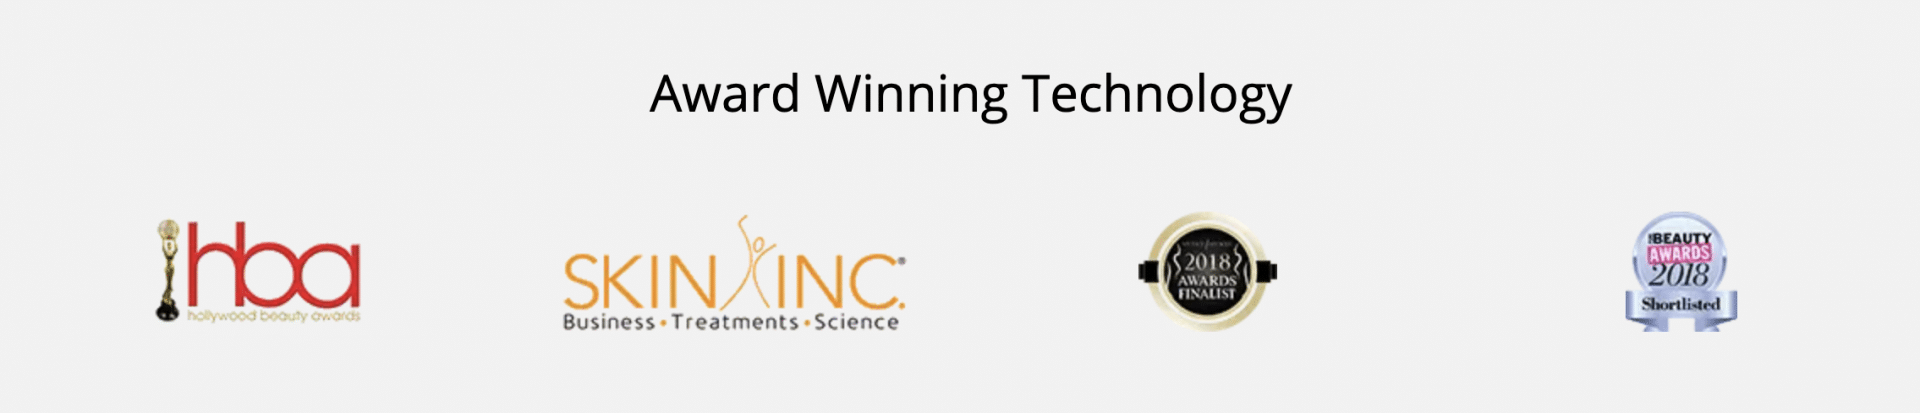 Award Winning Technology